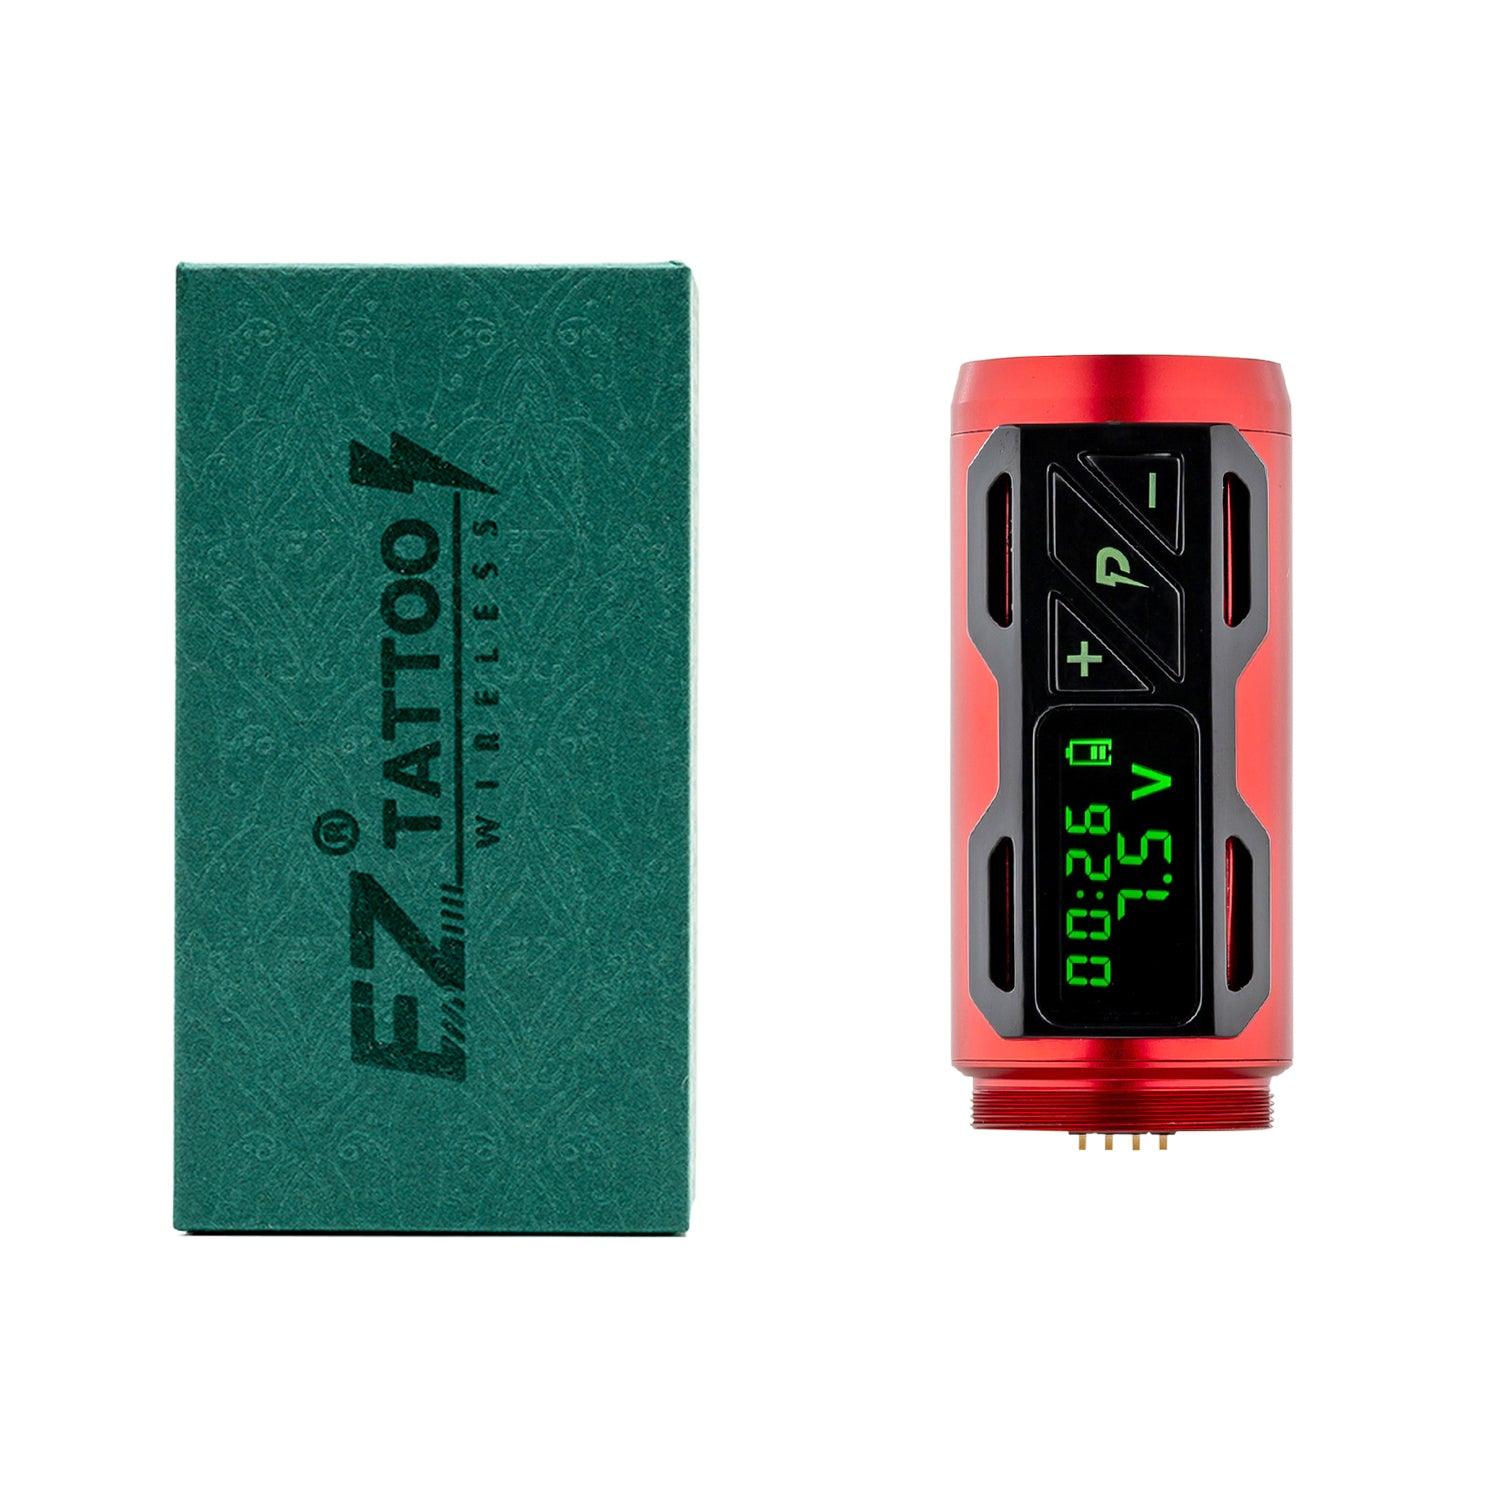 EZTATTOO - P2S Power Pack "Fuente de poder"